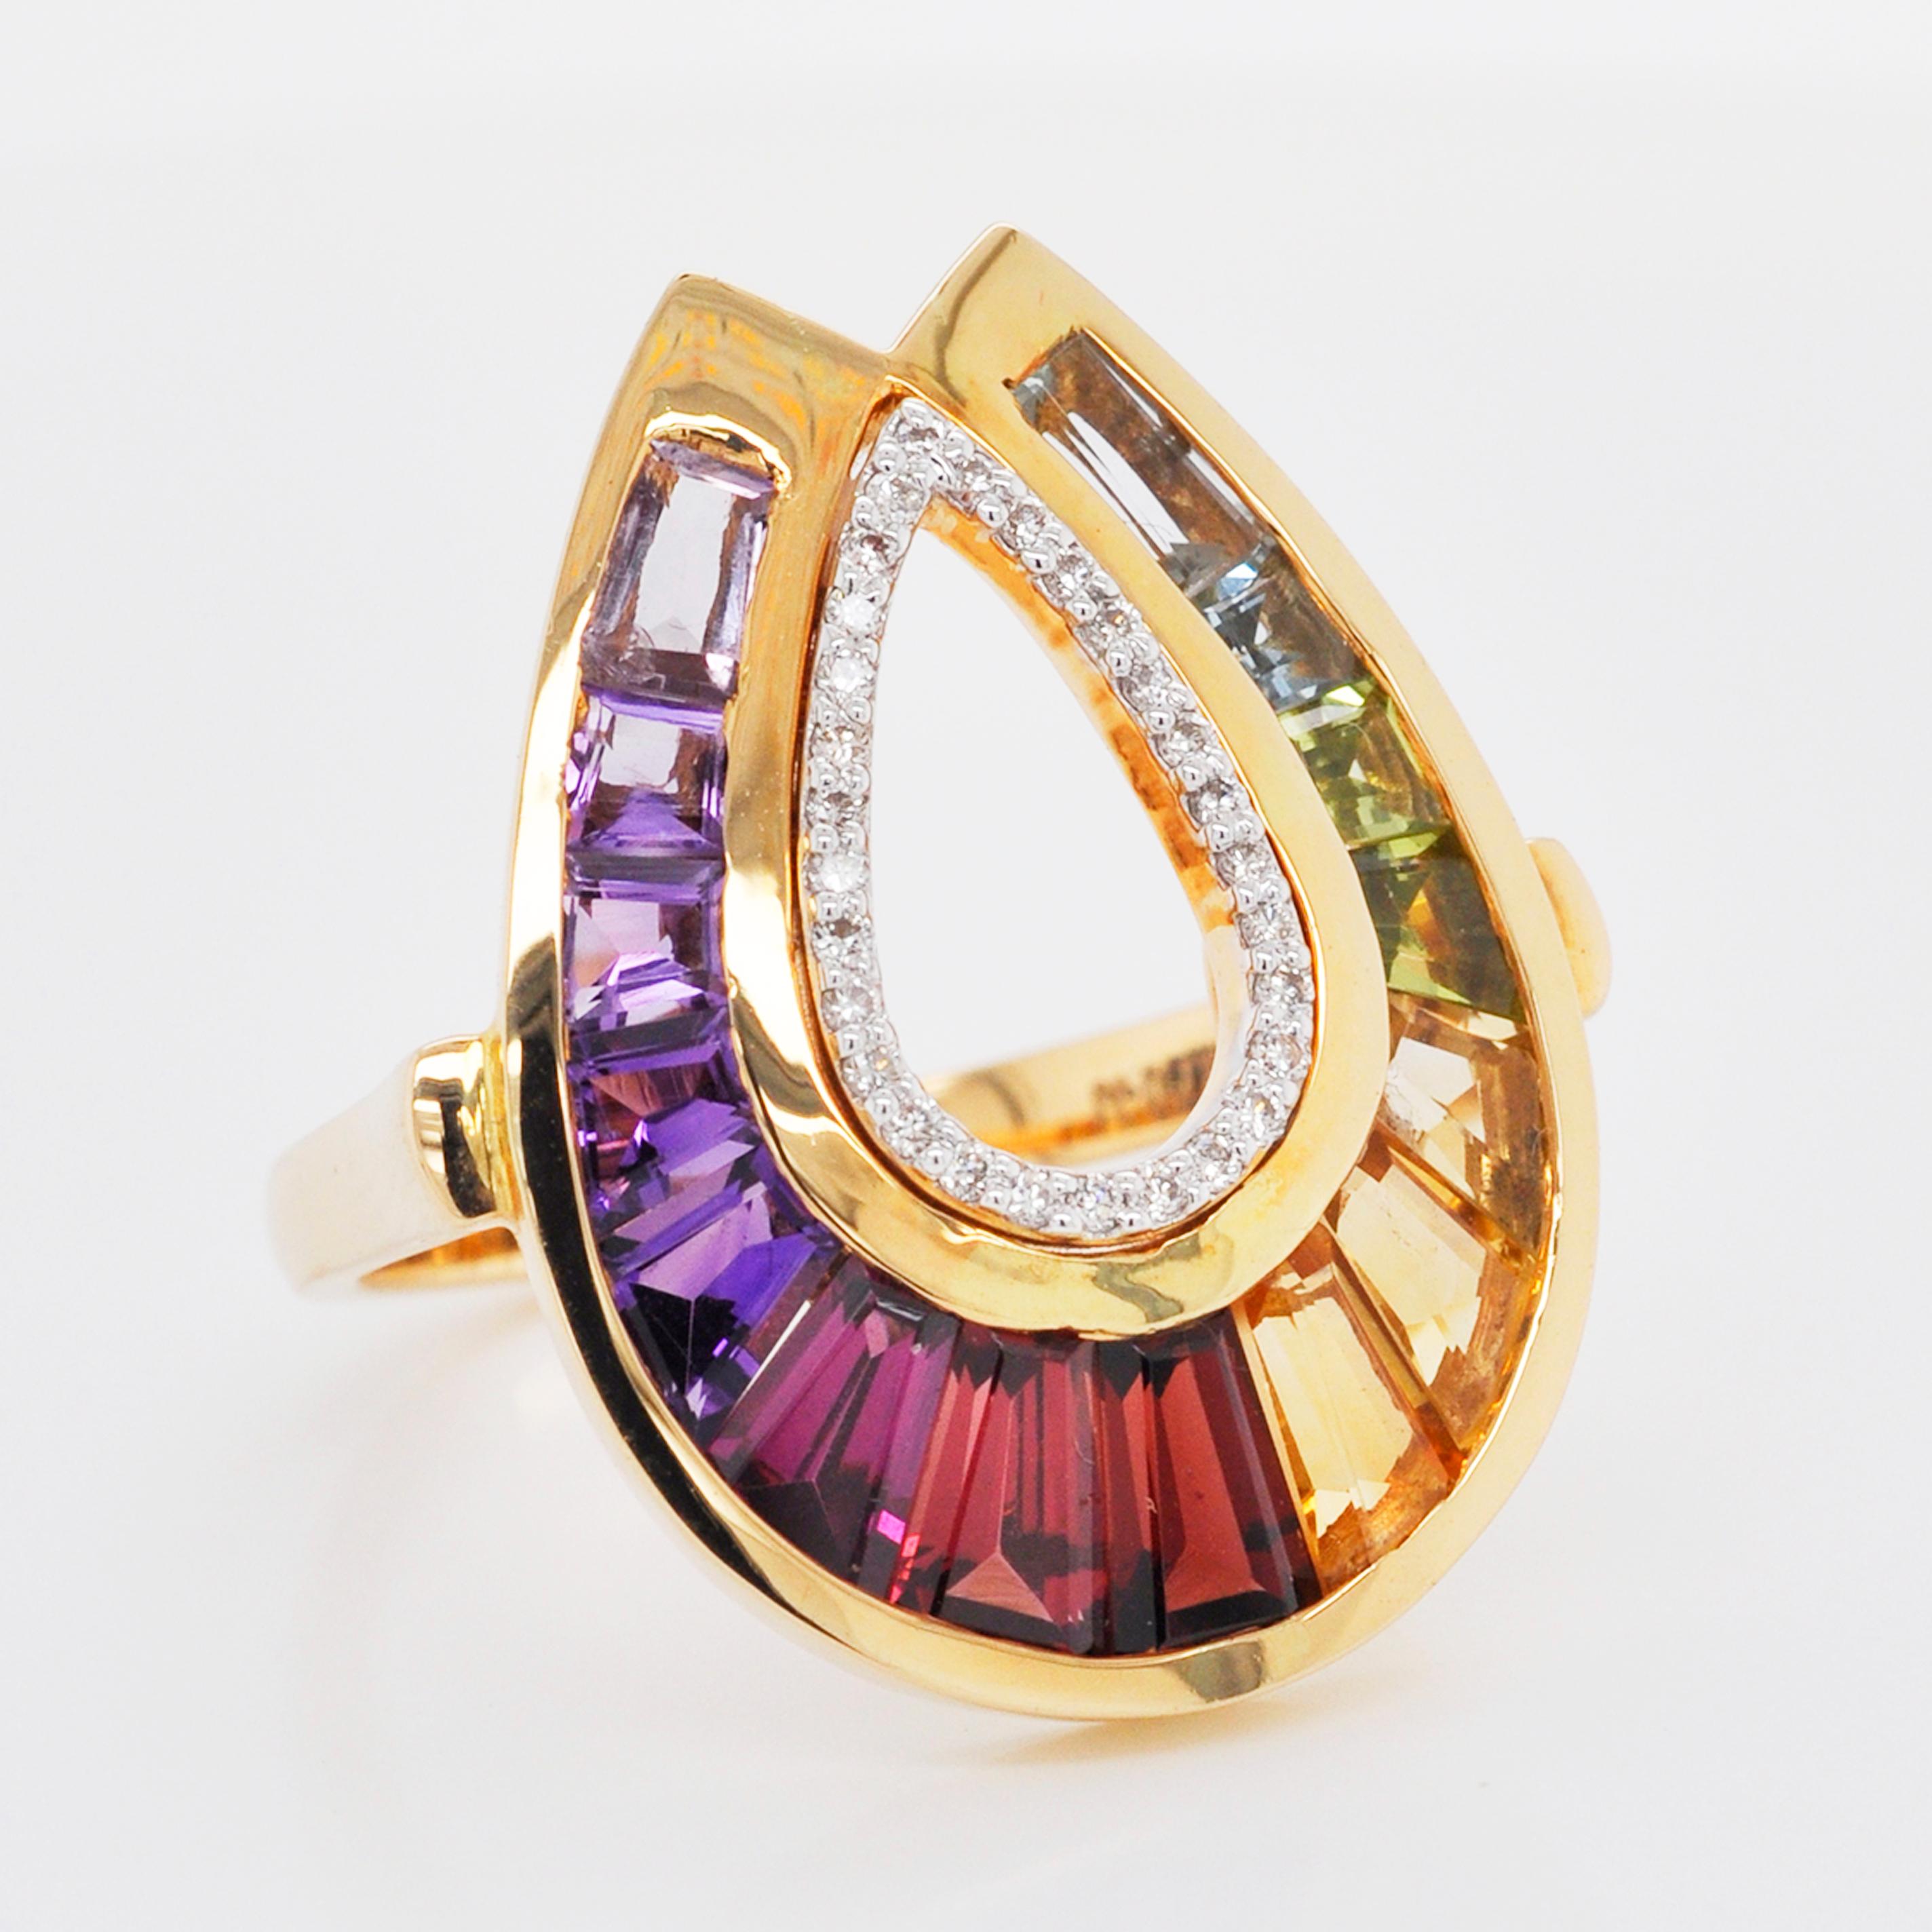 For Sale:  18 Karat Gold Channel Set Baguette Rainbow Gemstones Doorknocker Diamond Ring 8